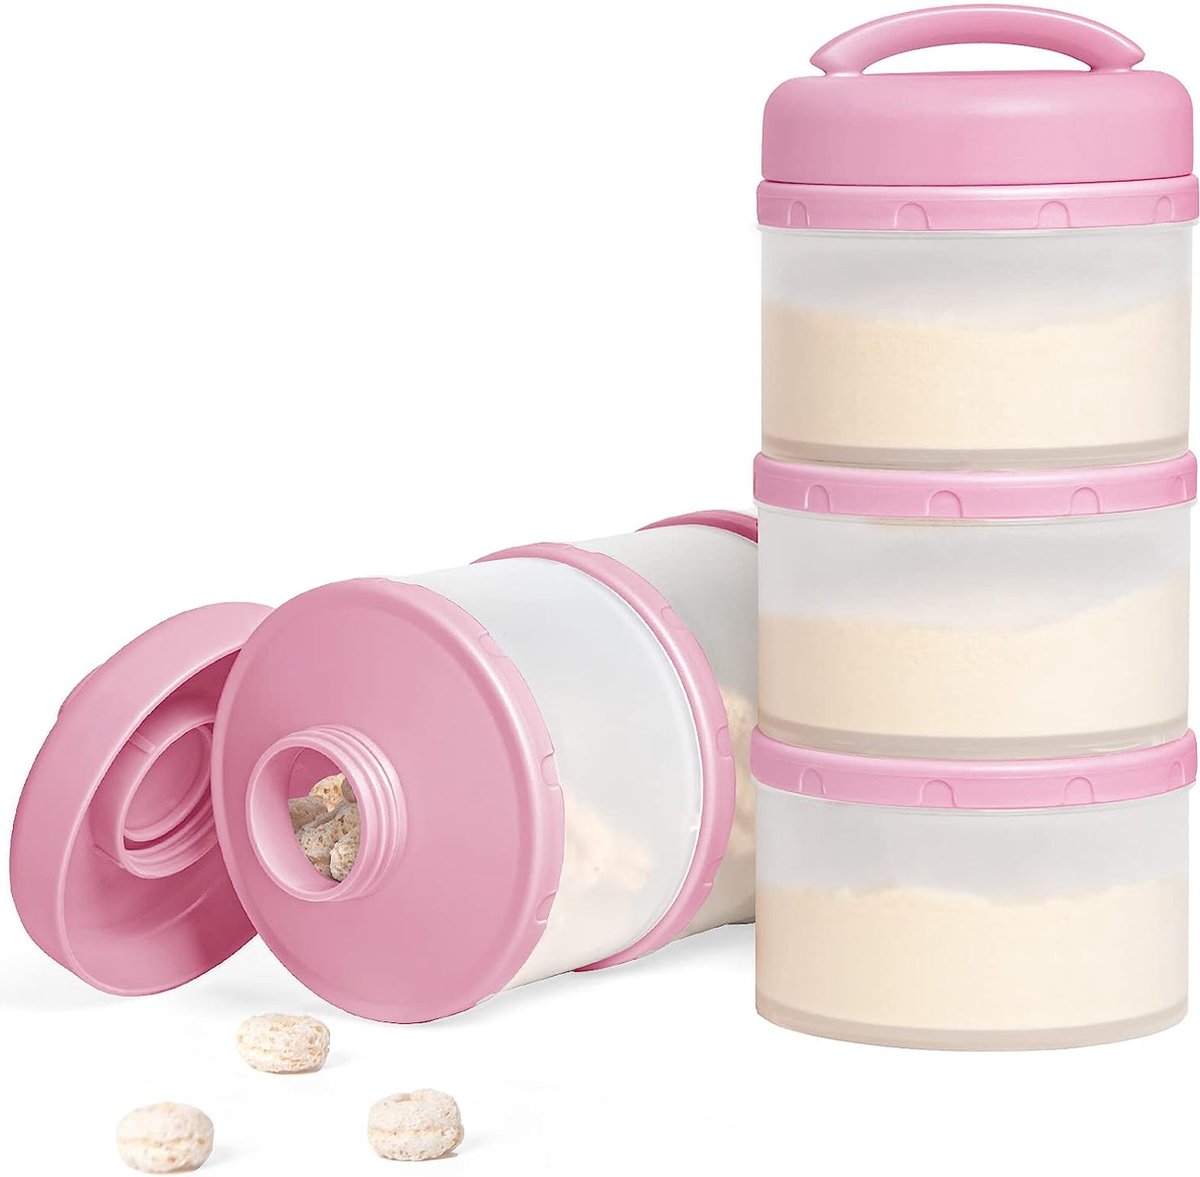 Melkpoeder portioneerder baby stapelbaar melkpoeder opbergdoos 2 stuks (babyroze-2)